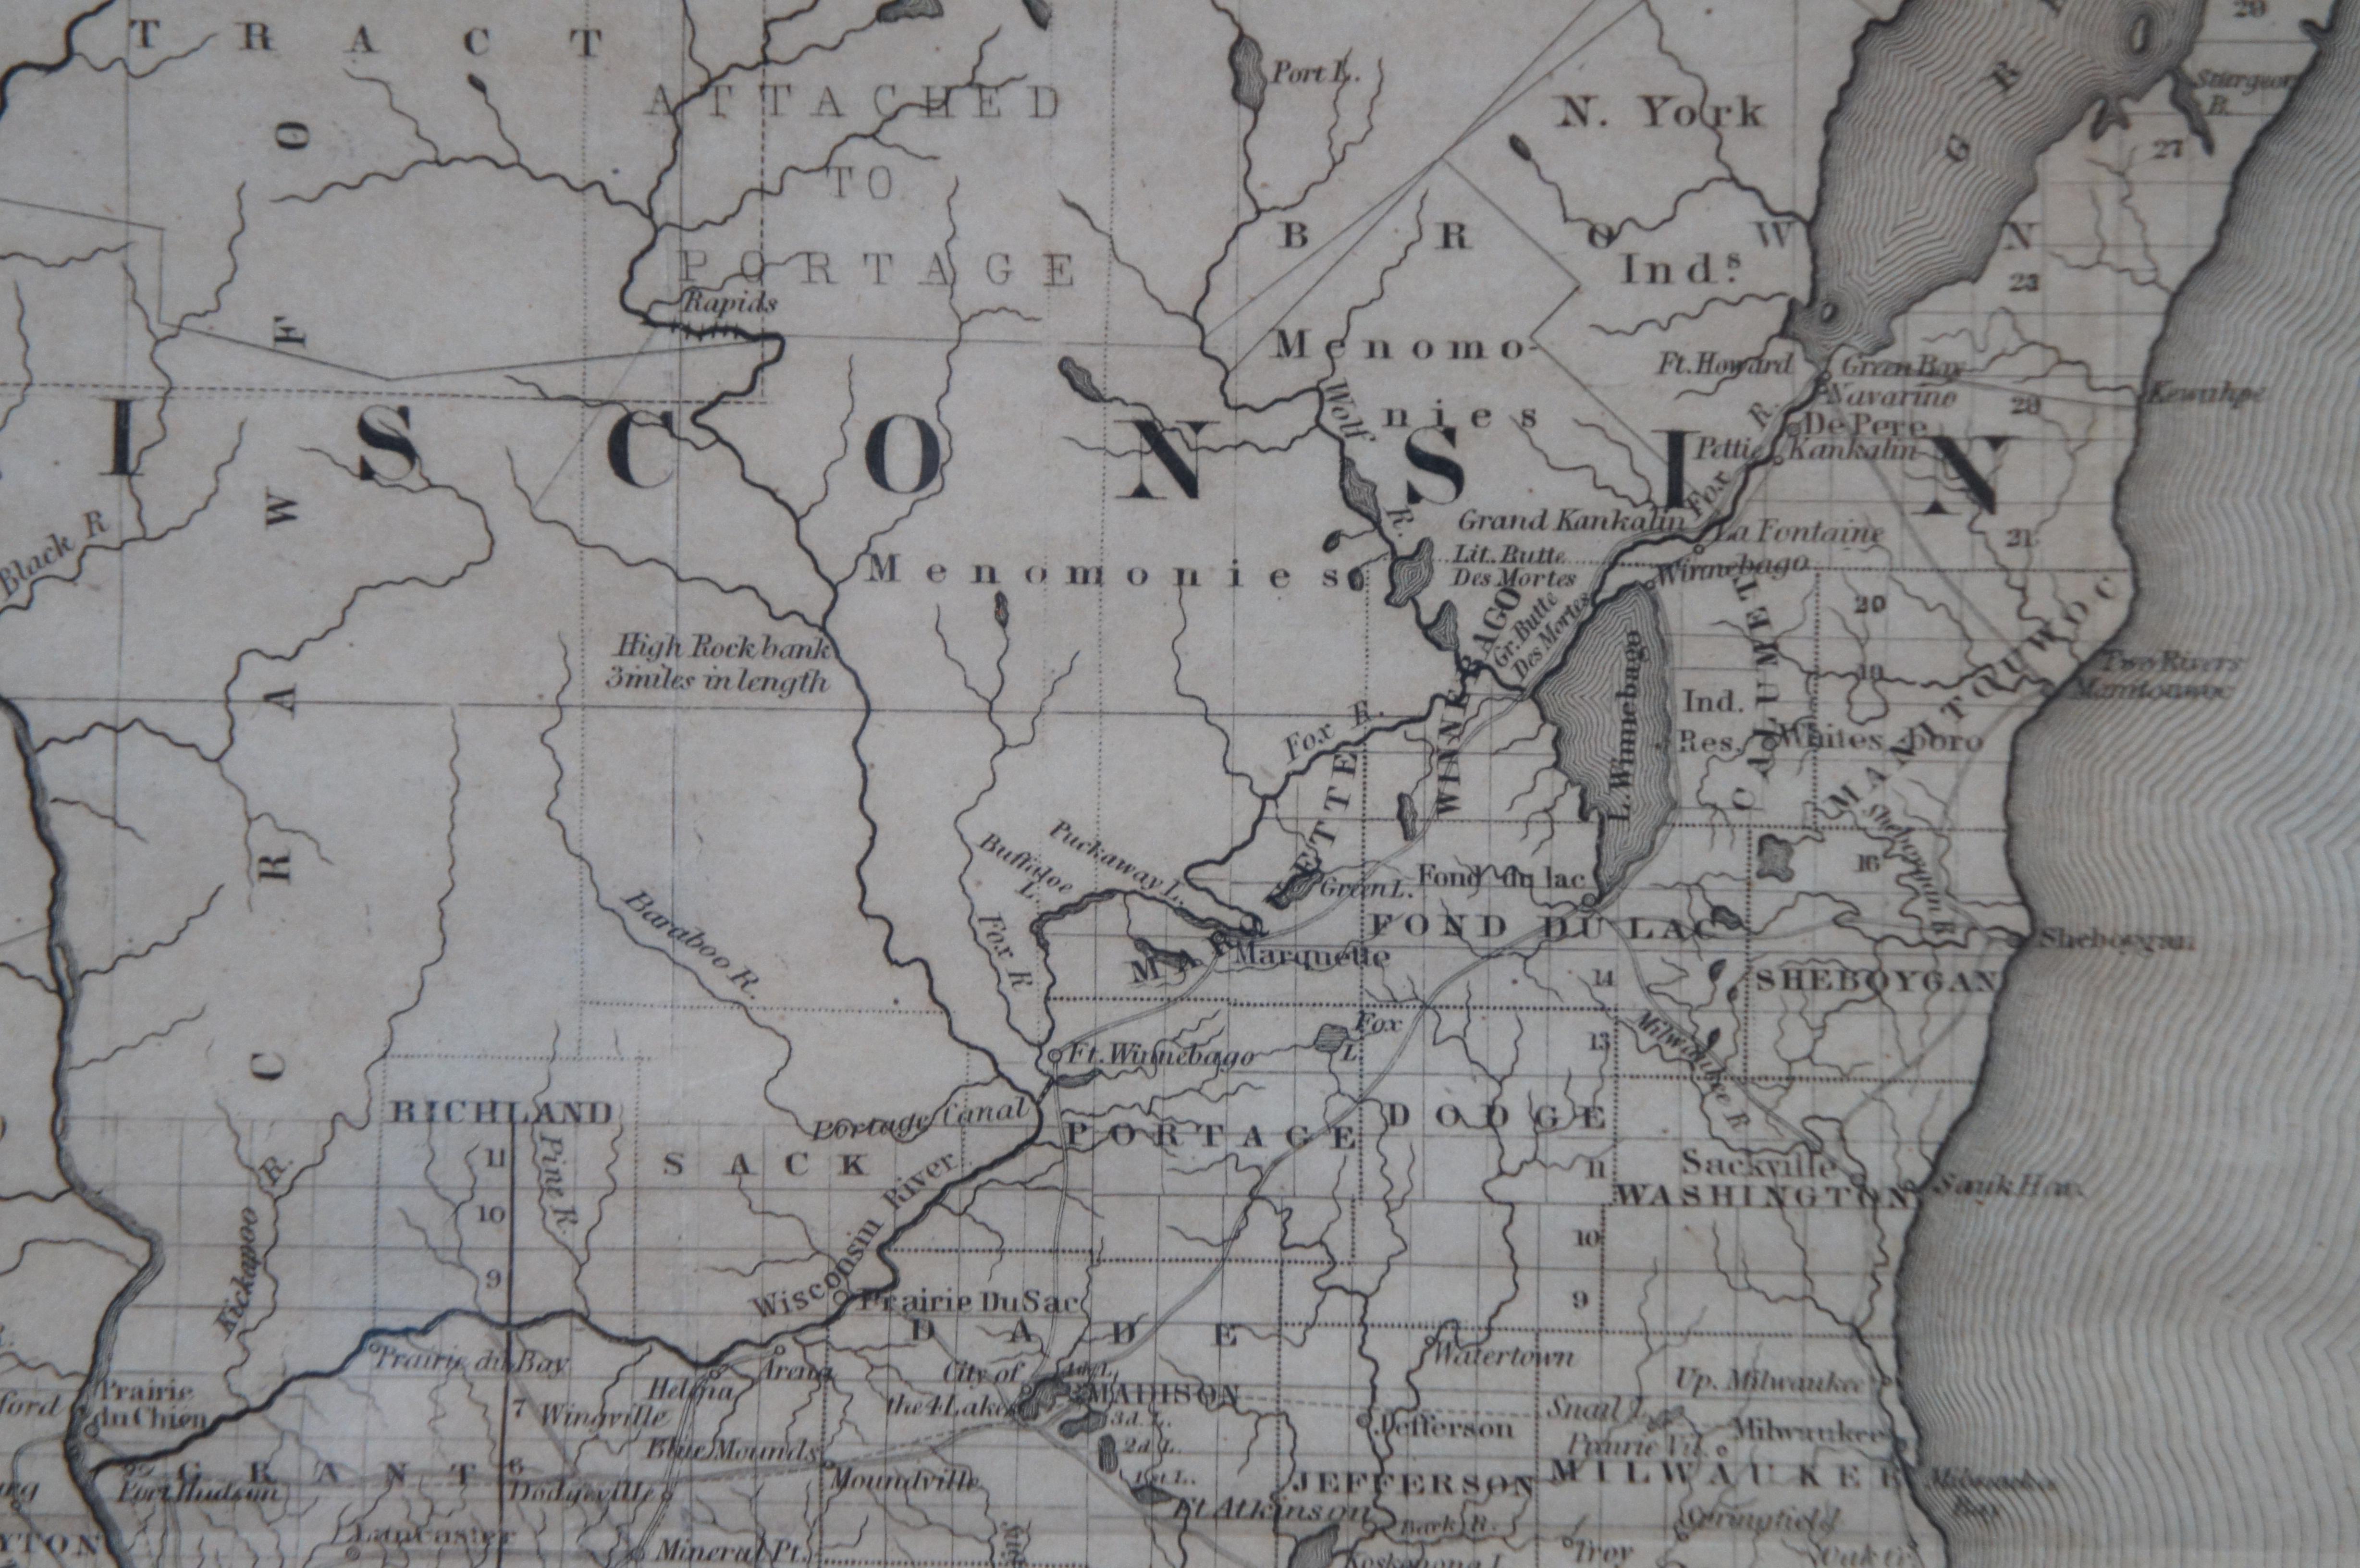 Antique 1844 J Calvin Smith JH Colton Midwest United States Survey Map 27